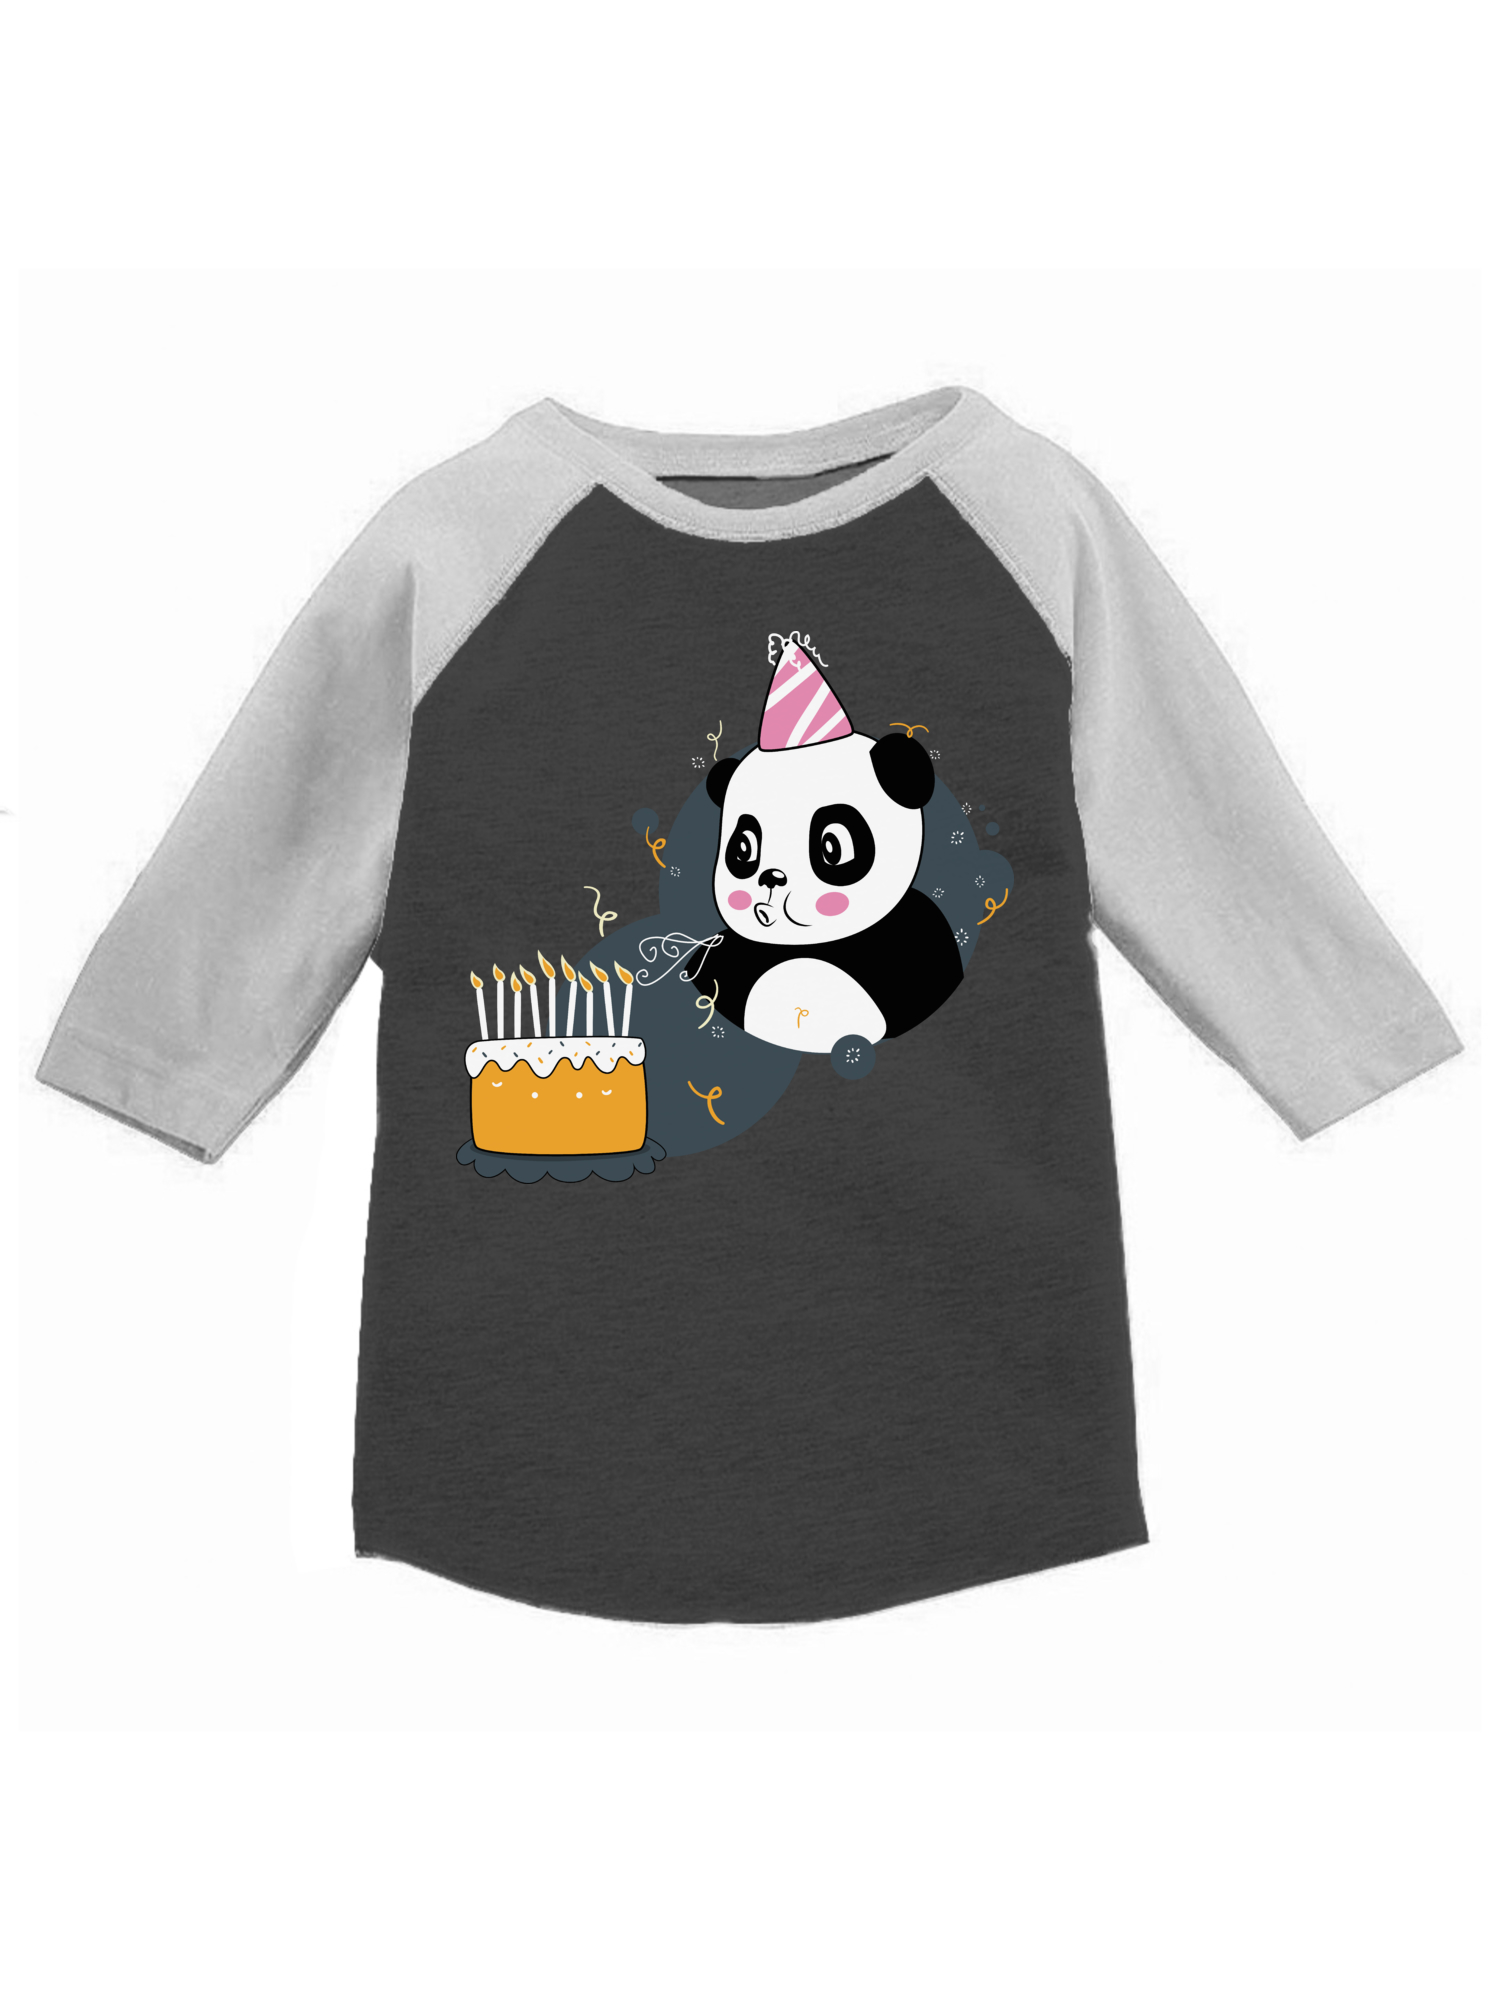 Awkward Styles Panda Birthday Toddler Raglan Themed Party Cute Kids Birthday Shirts Animal Lover Funny Panda Baseball Tshirts for Boys Funny Panda Baseball Tshirts for Girls Birthday Gifts - image 1 of 4